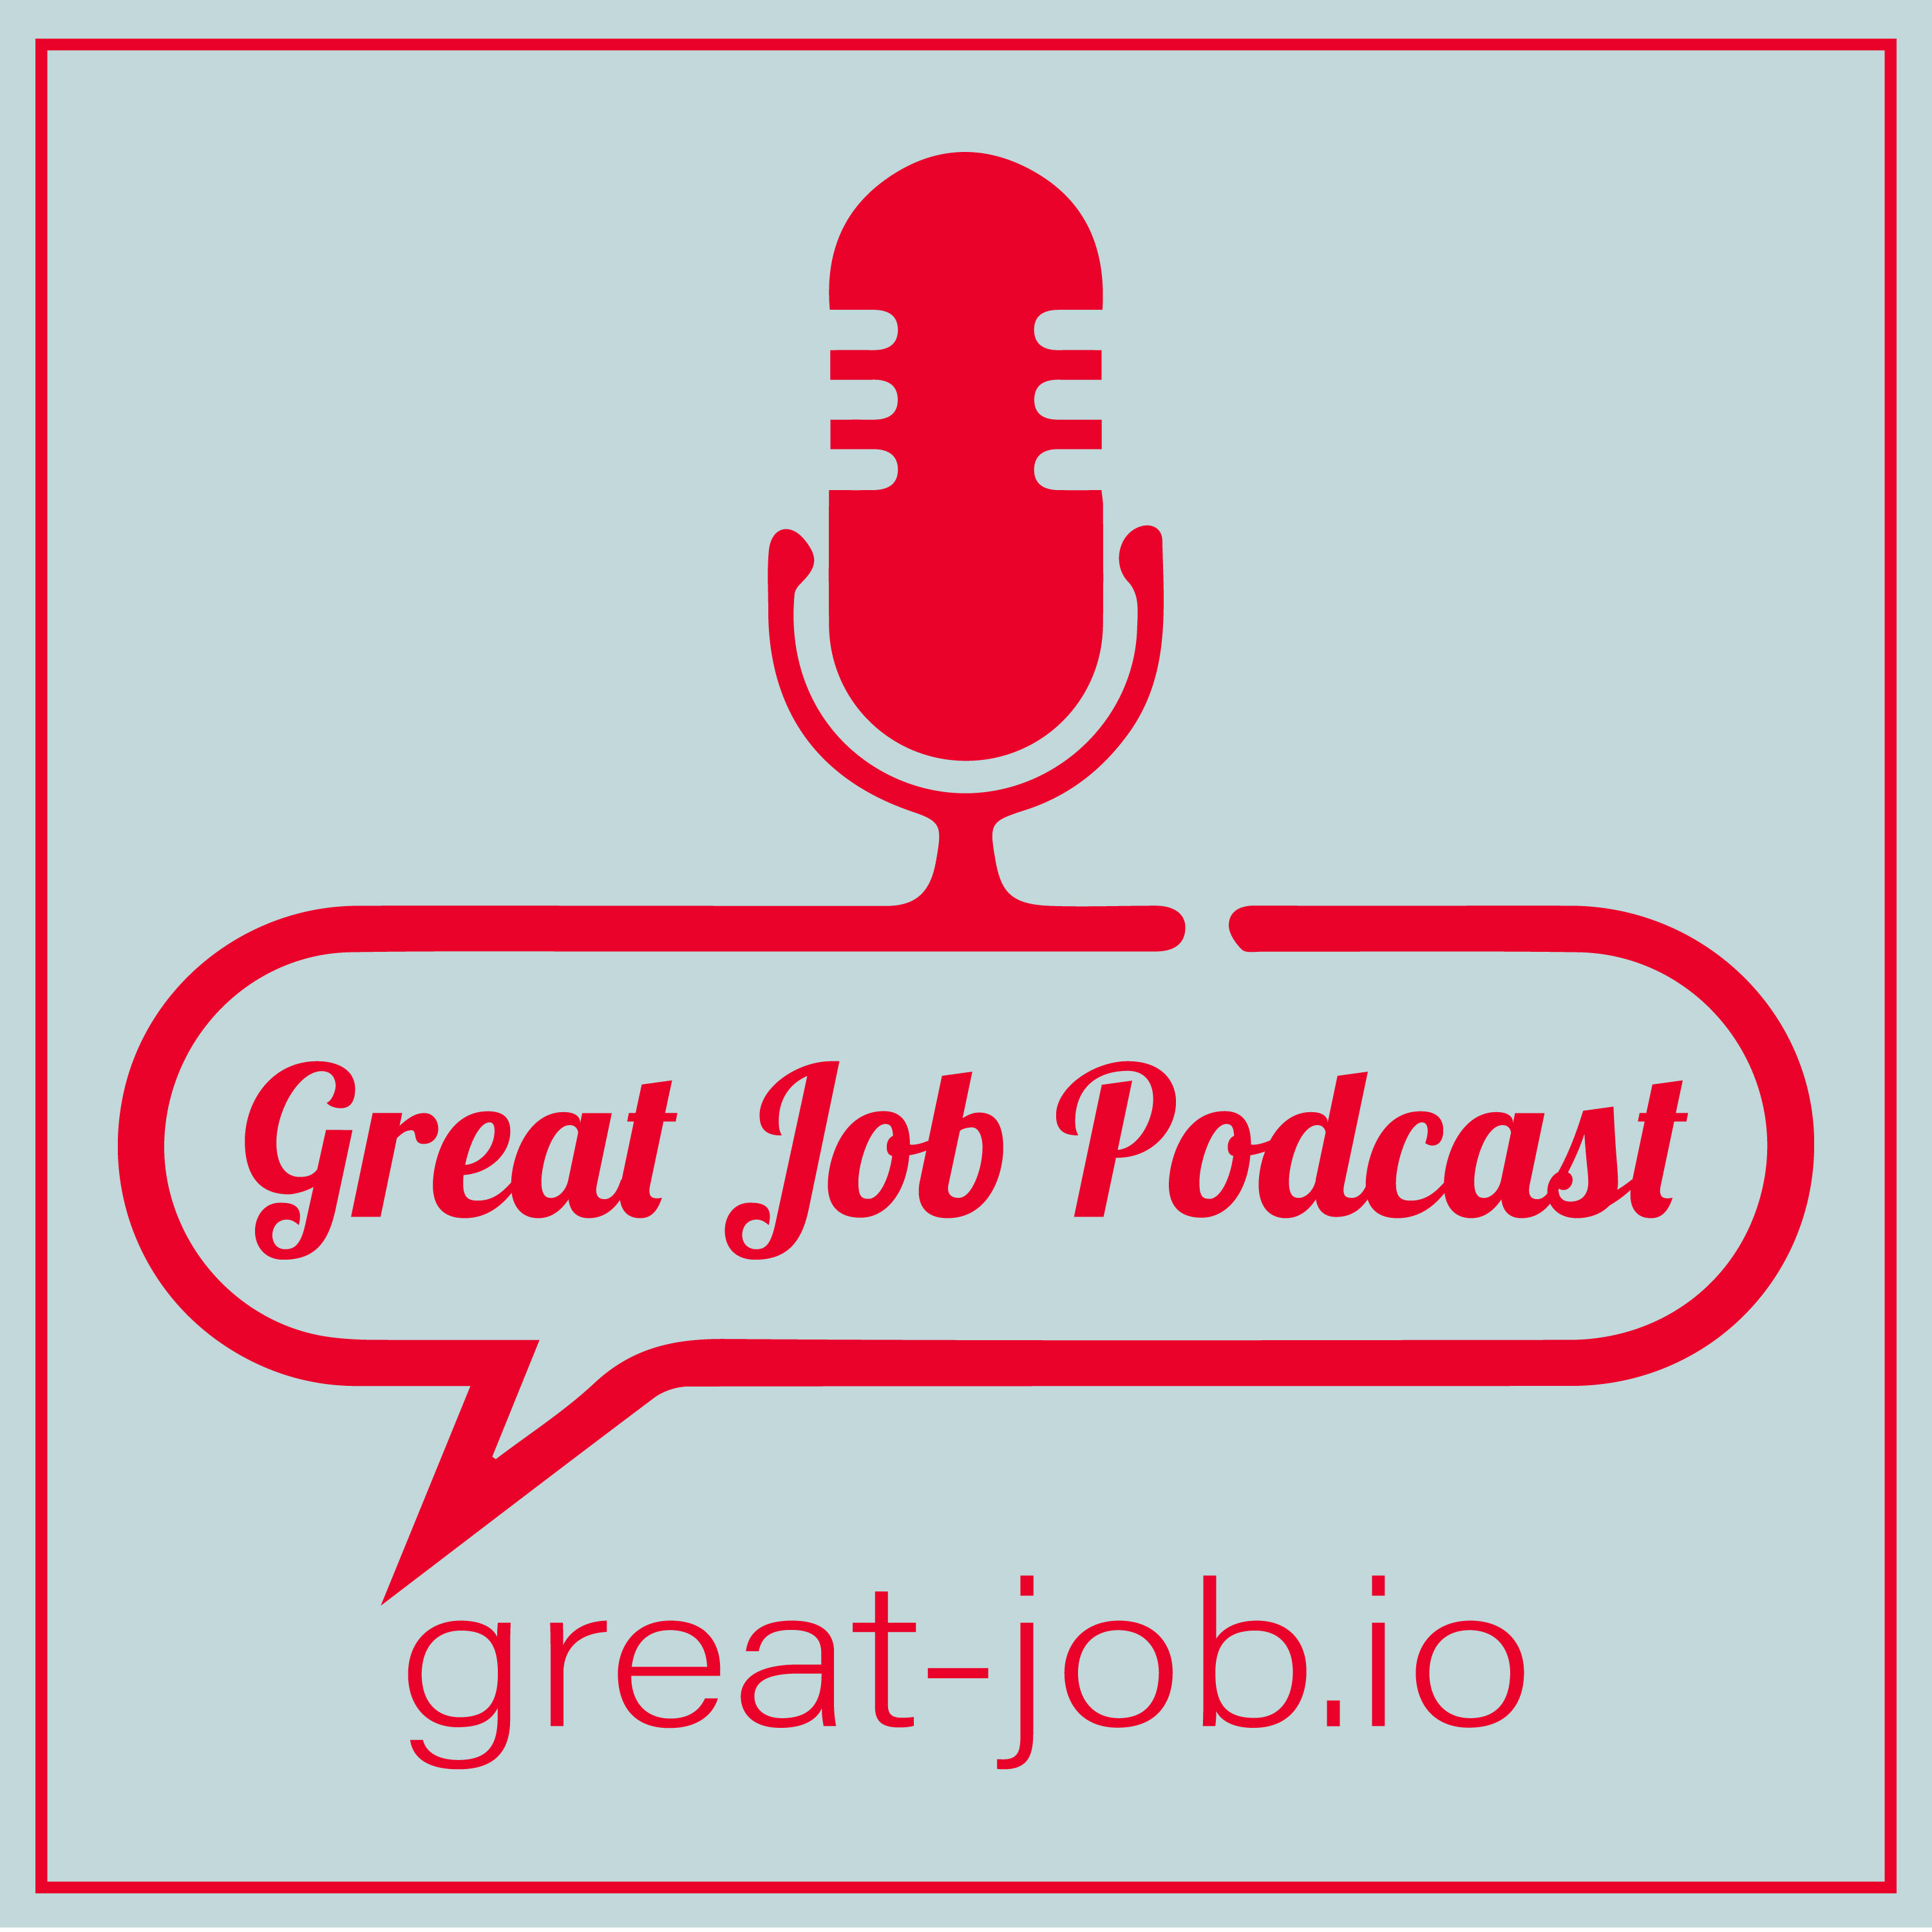 Great Job Podcast